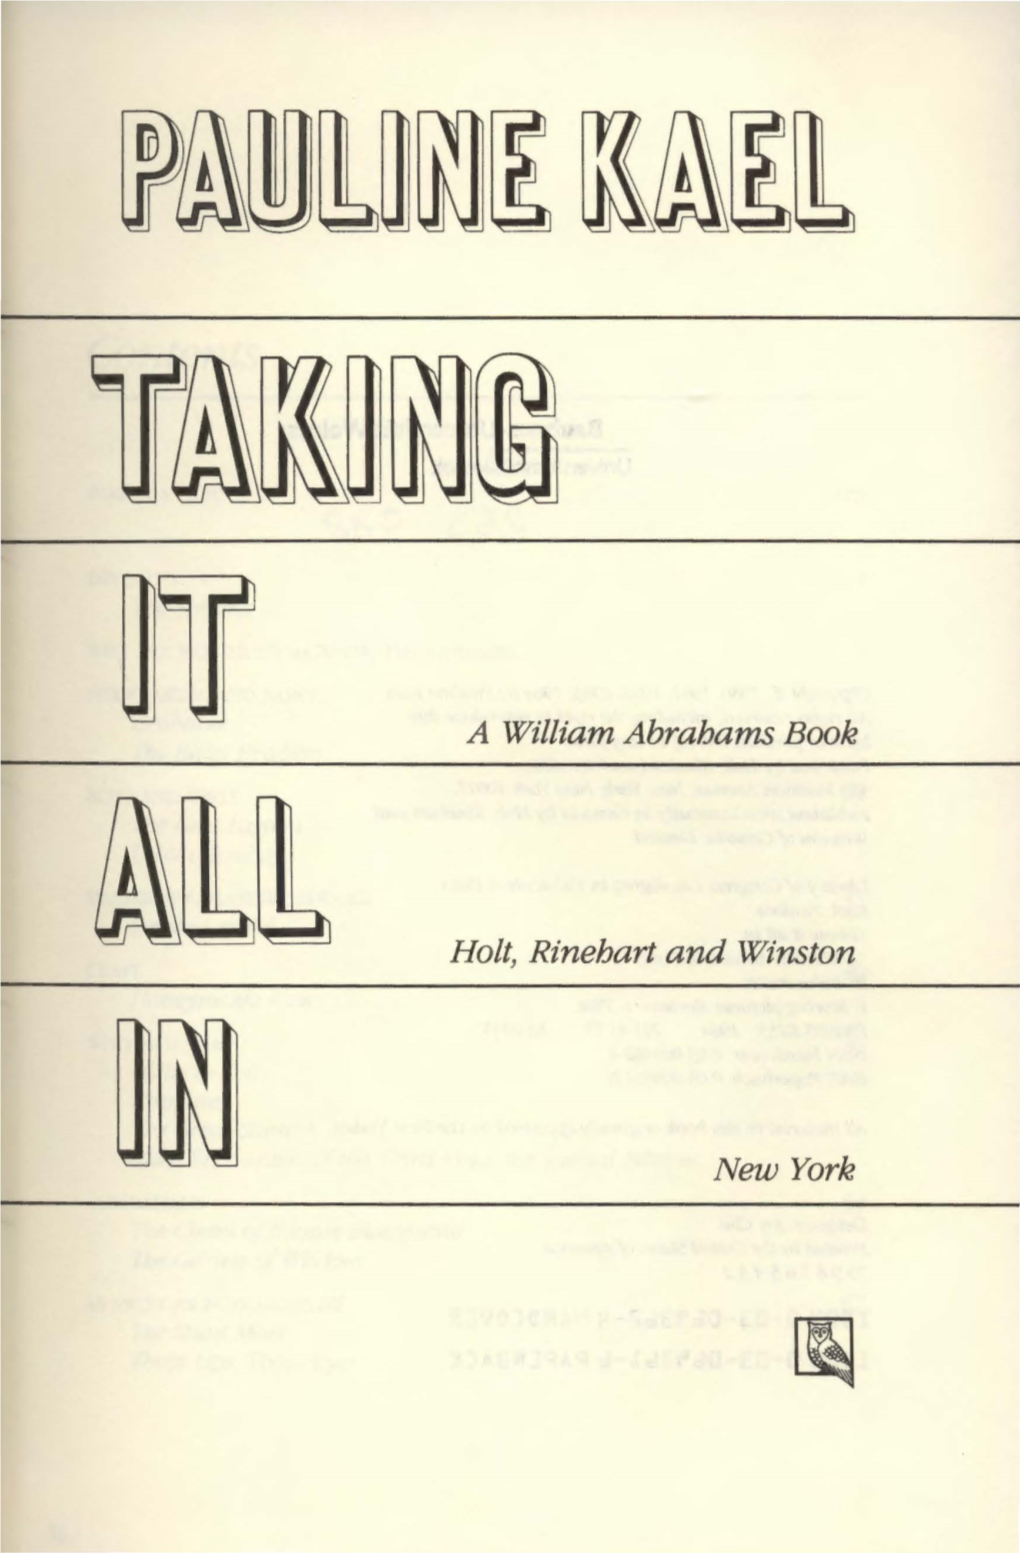 VA William Abrahams Book ~~Lli Holt, Rinehart and Winston